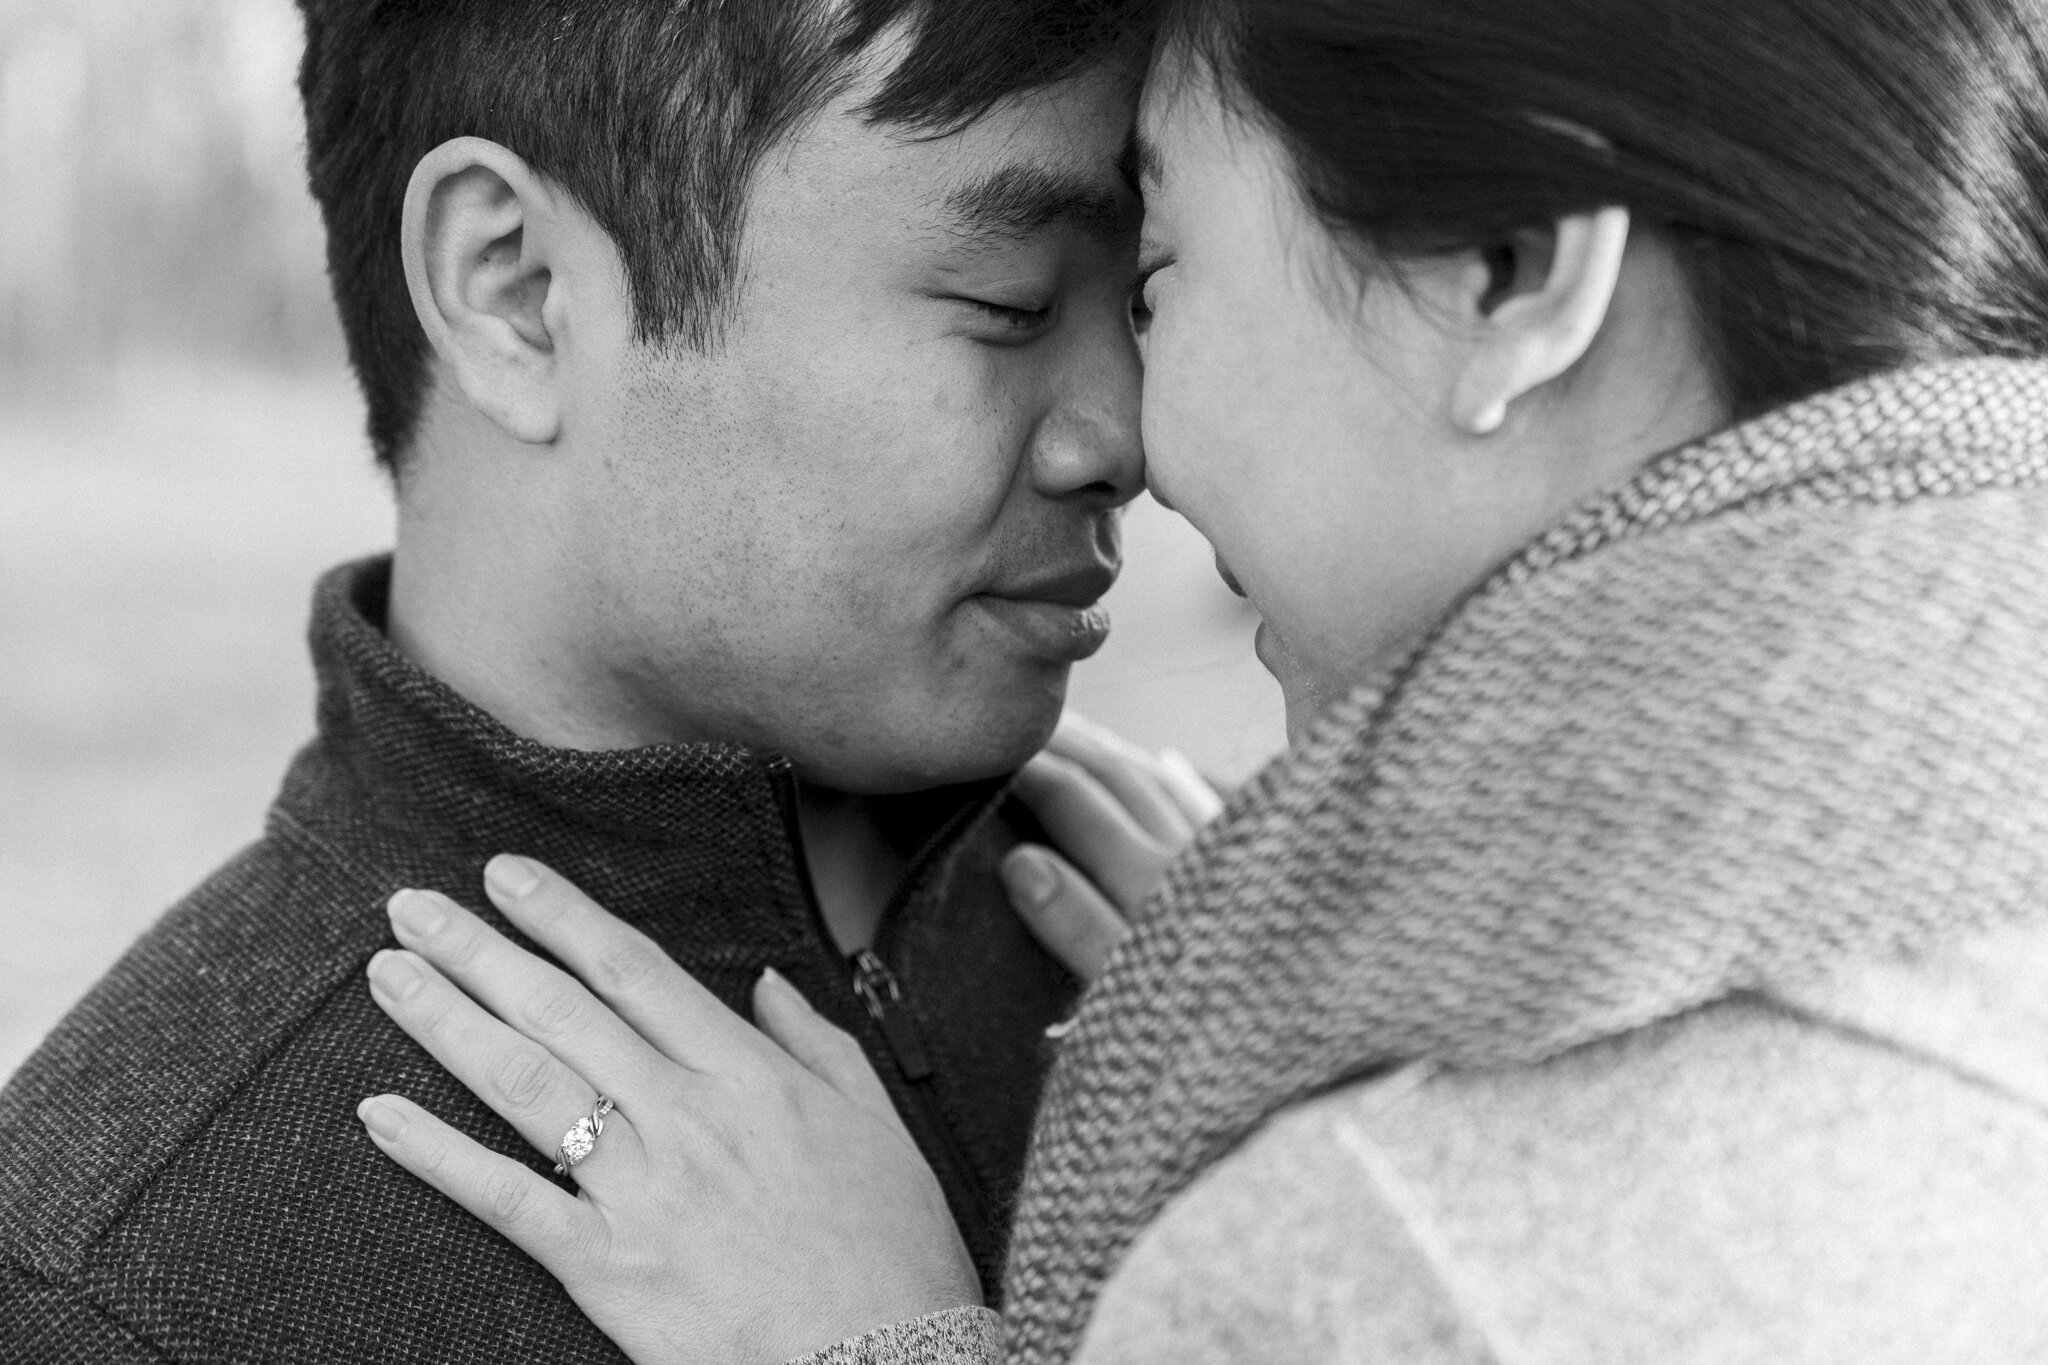 013021_GabeKaty Engagement_Winston Zhou Photo-84.jpg